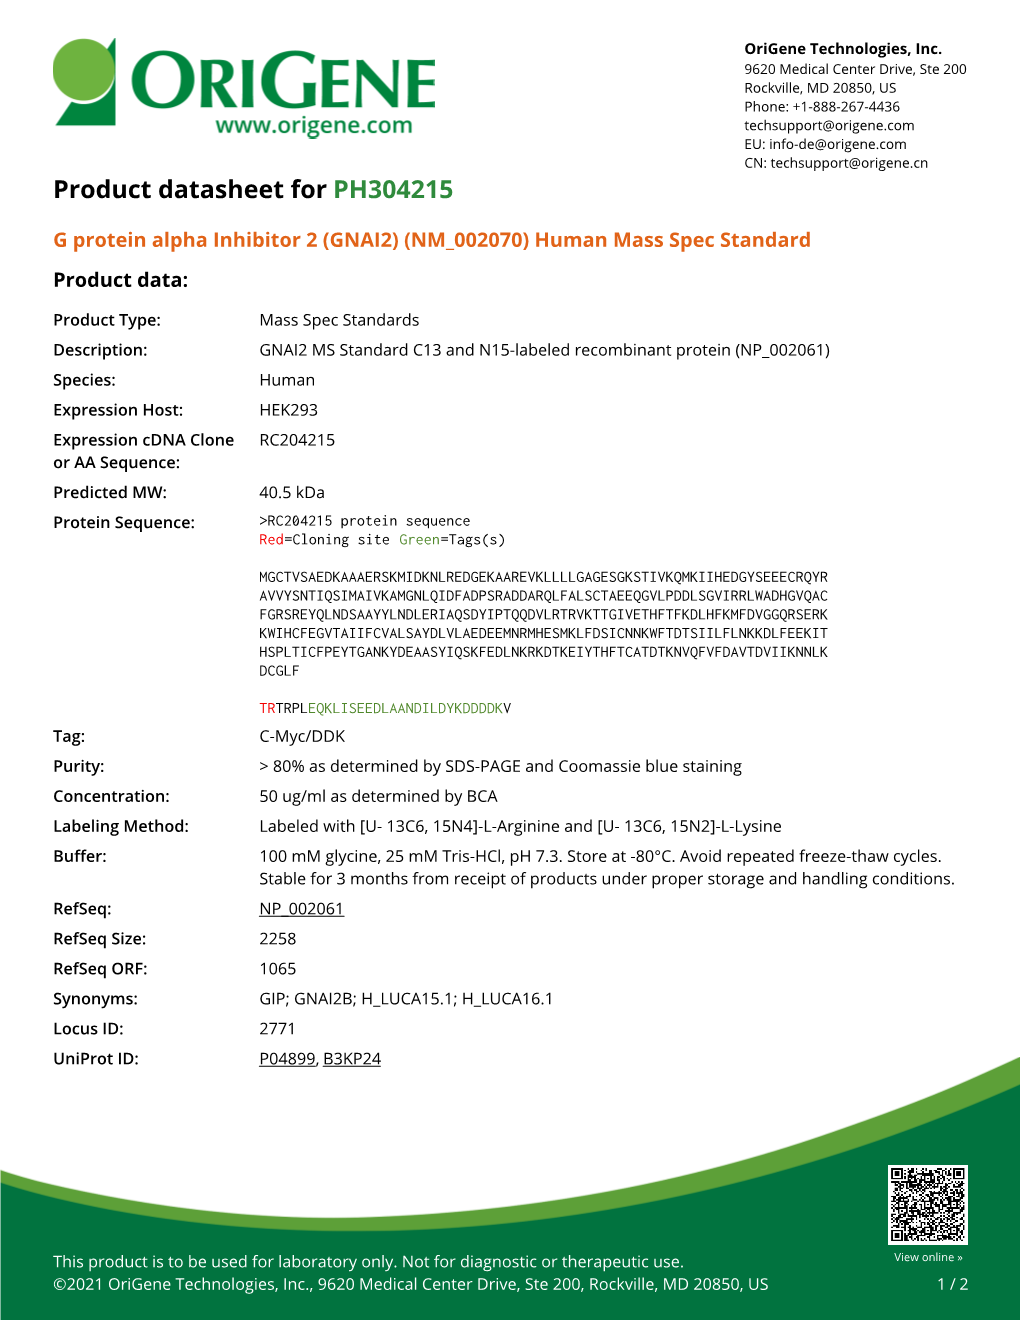 G Protein Alpha Inhibitor 2 (GNAI2) (NM 002070) Human Mass Spec Standard – PH304215 | Origene